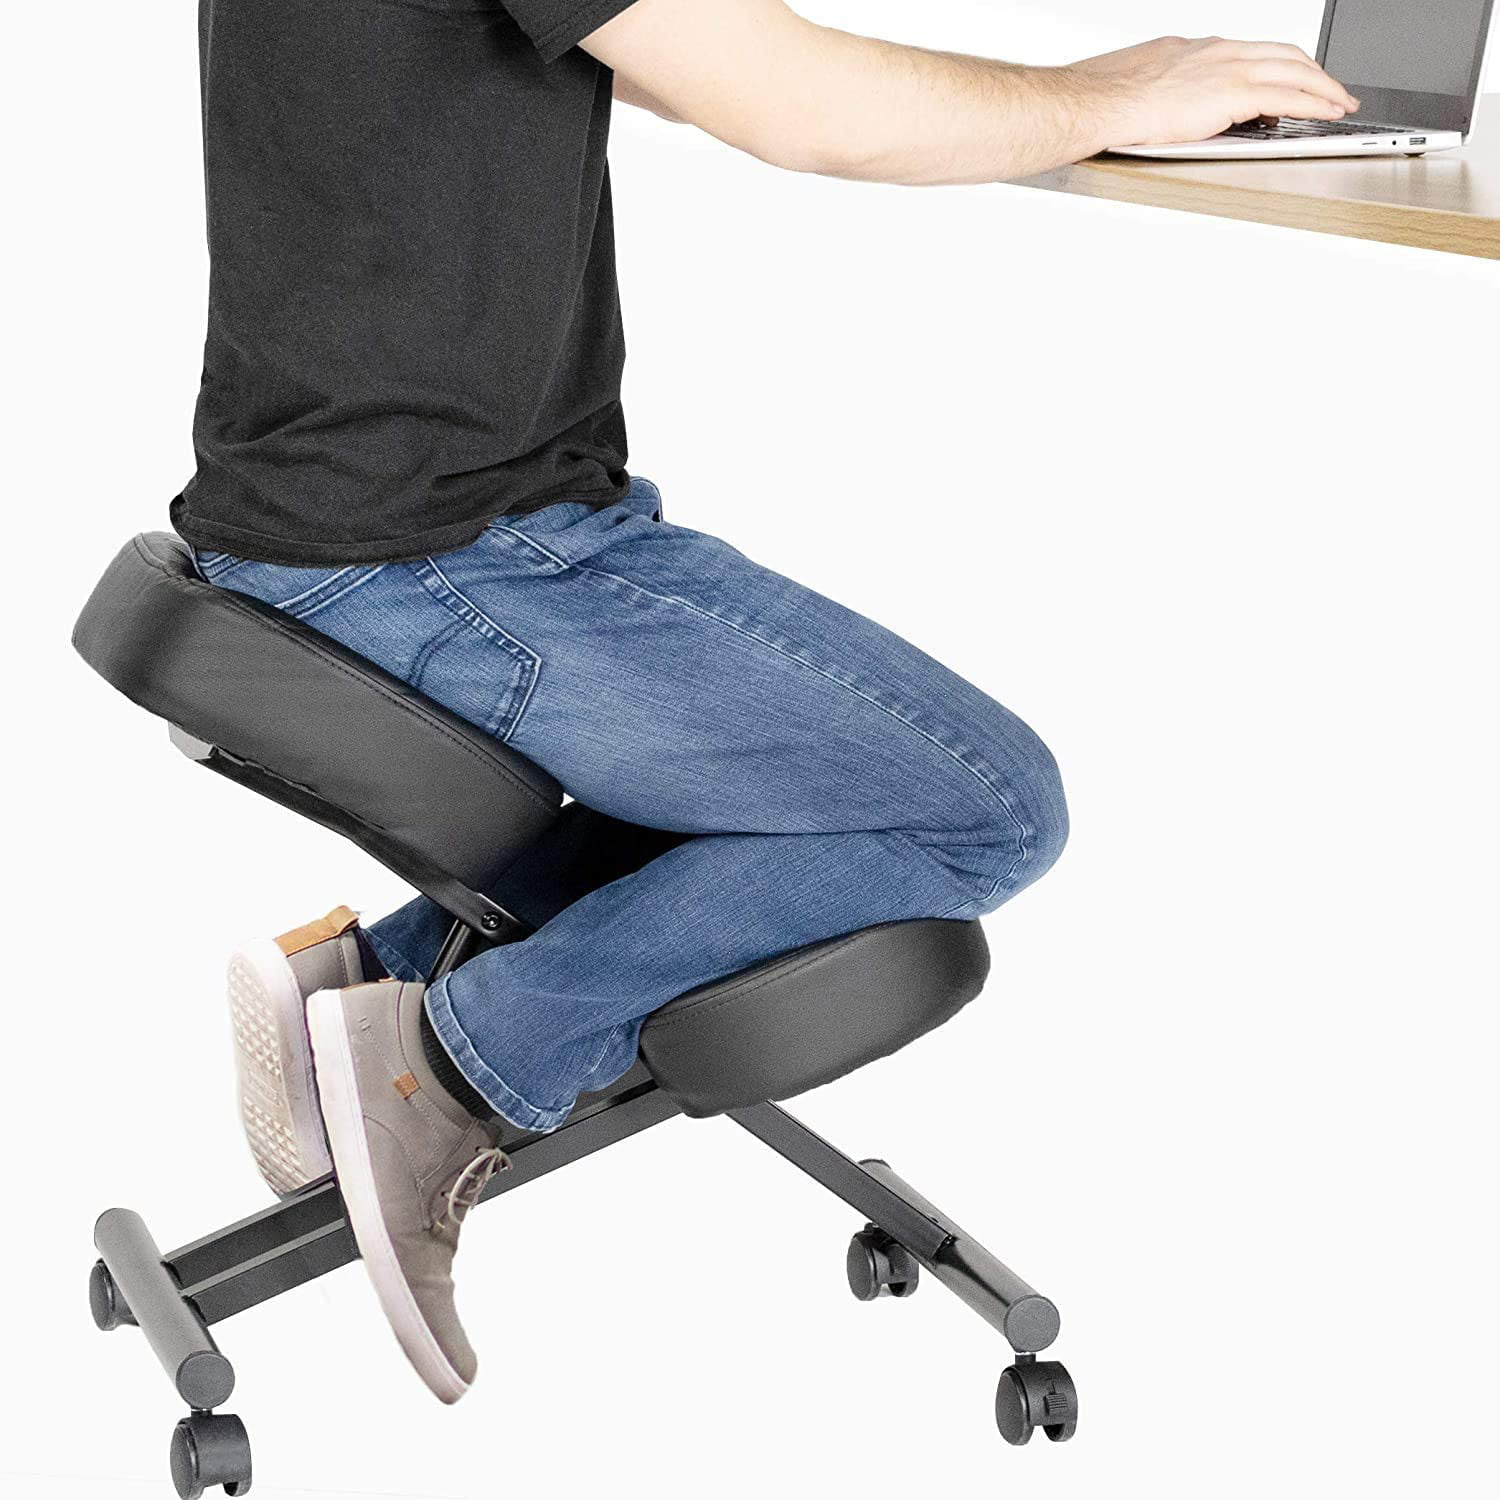 Ergonomic Kneeling Chair Adjustable Stool for Home Office Best Gift 